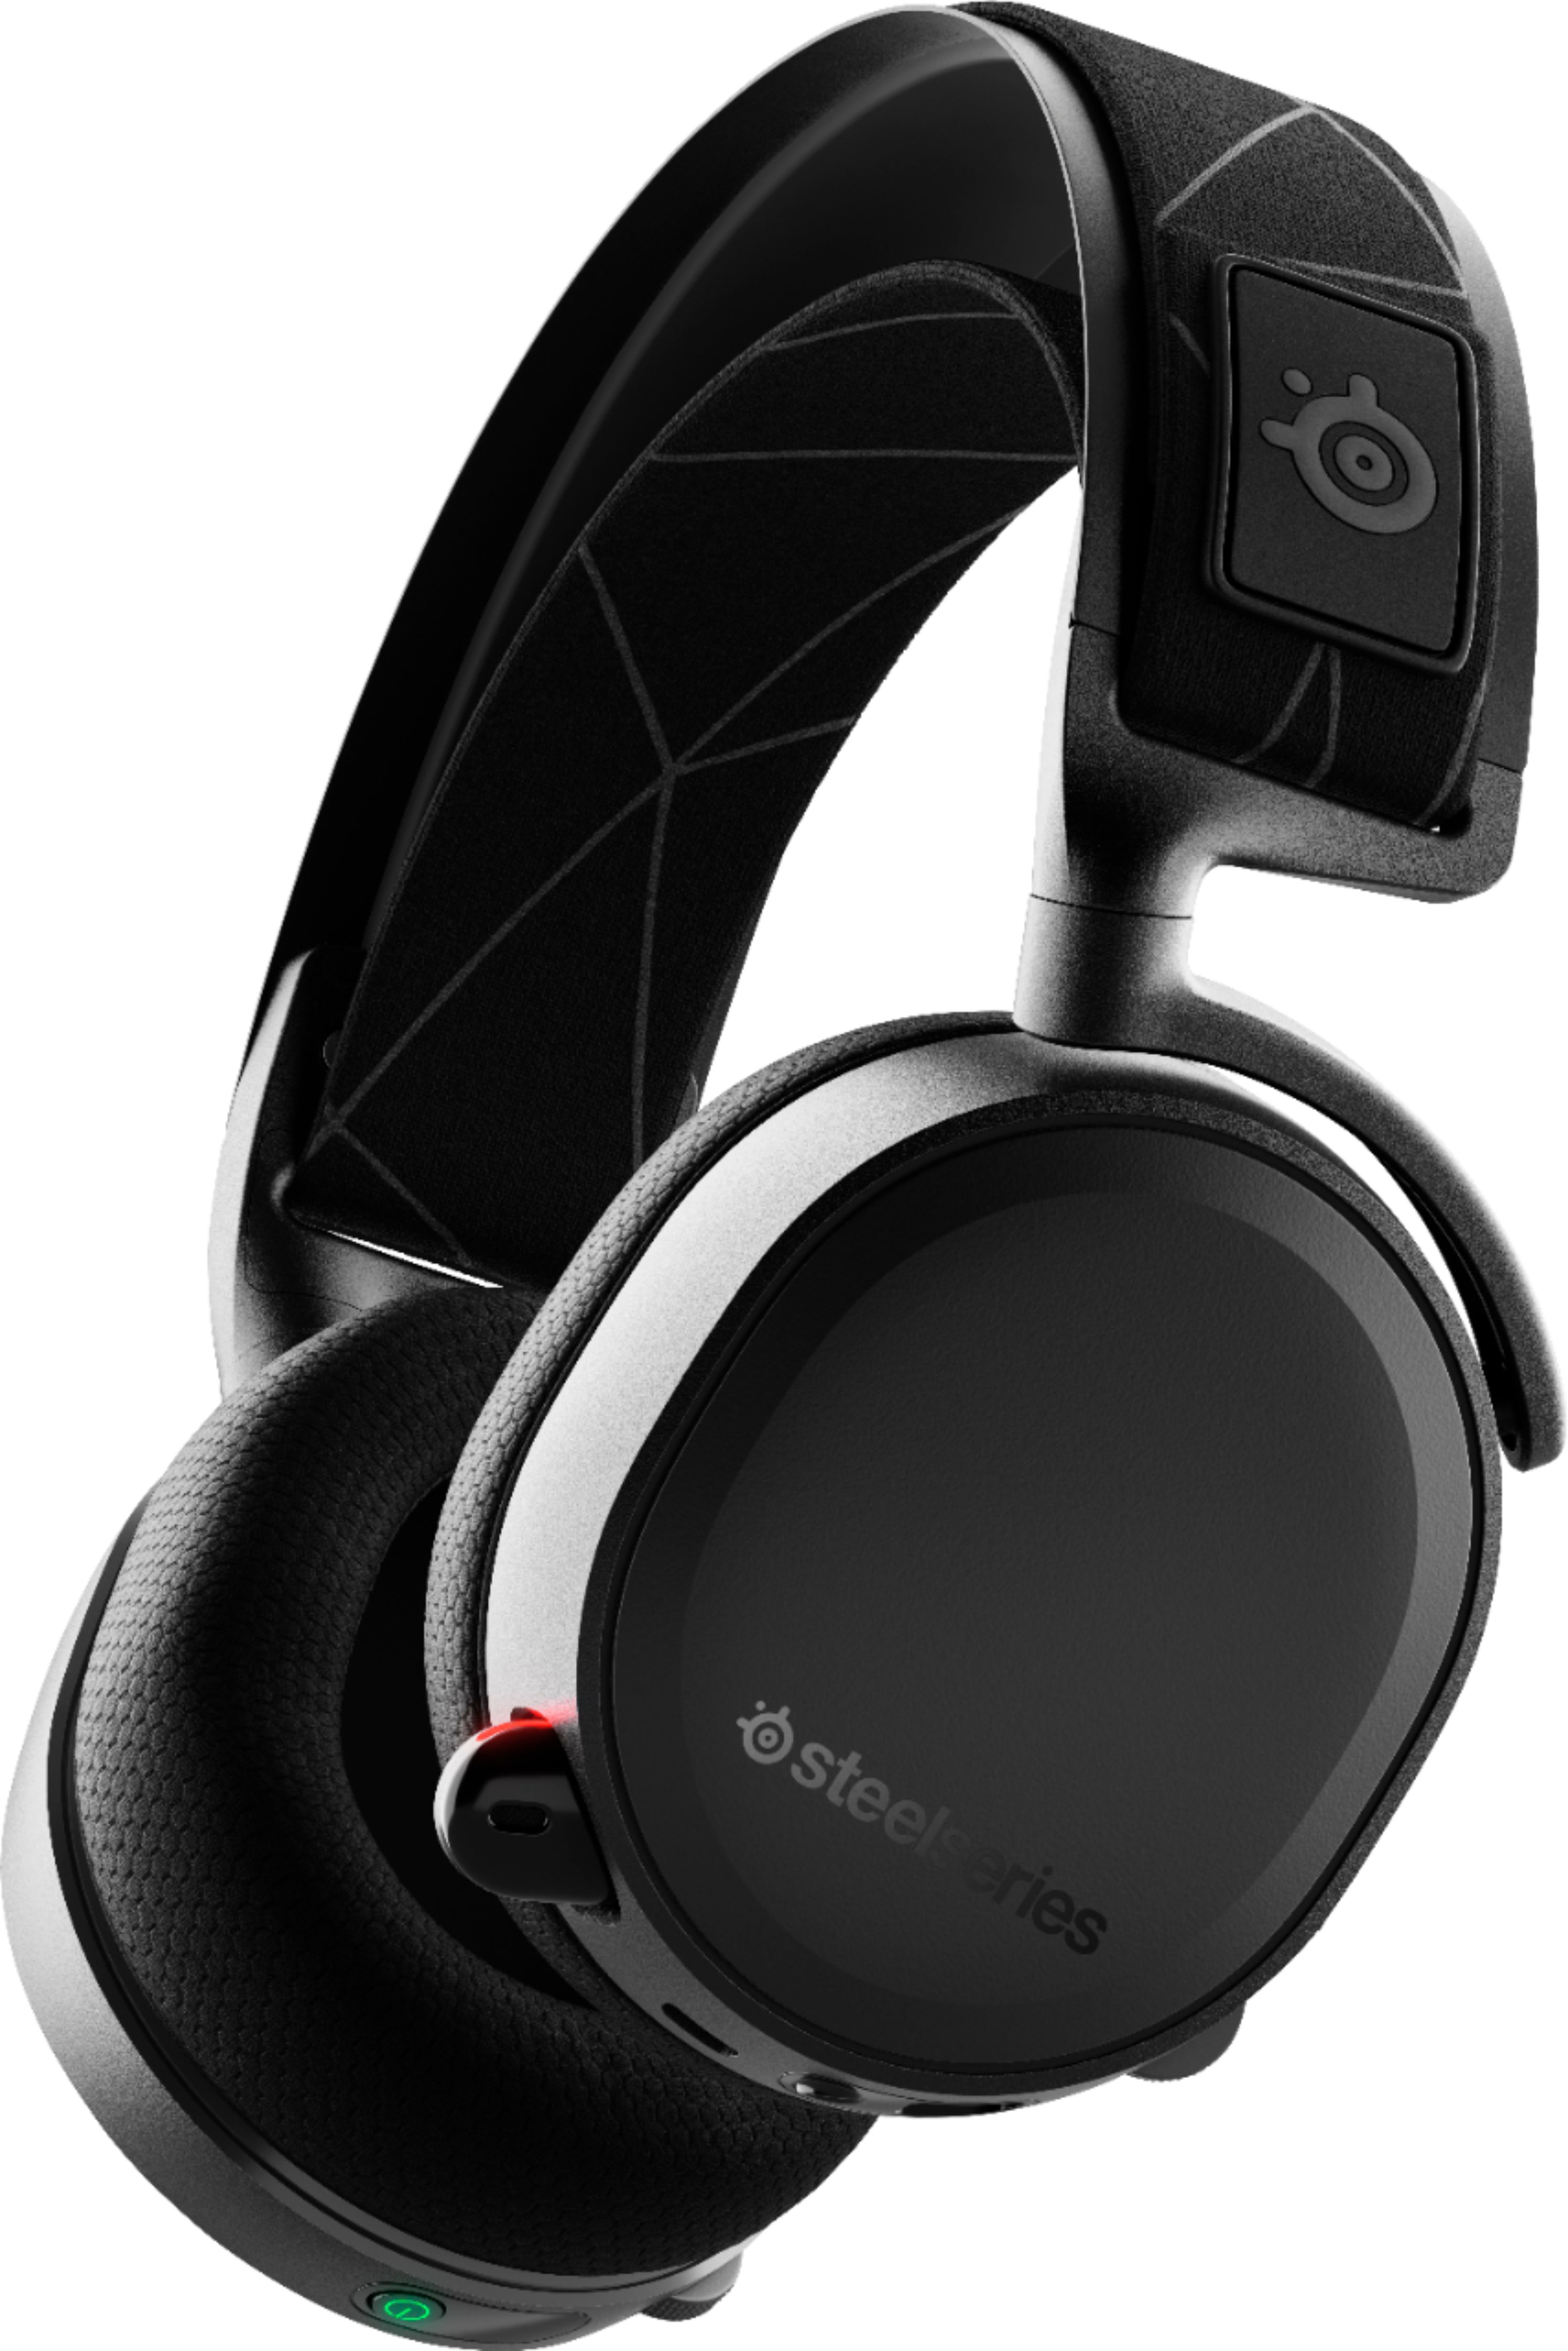 SteelSeries - Arctis 7 Wireless DTS Headphone Gaming Headset para PC y PlayStation 4 - Negro